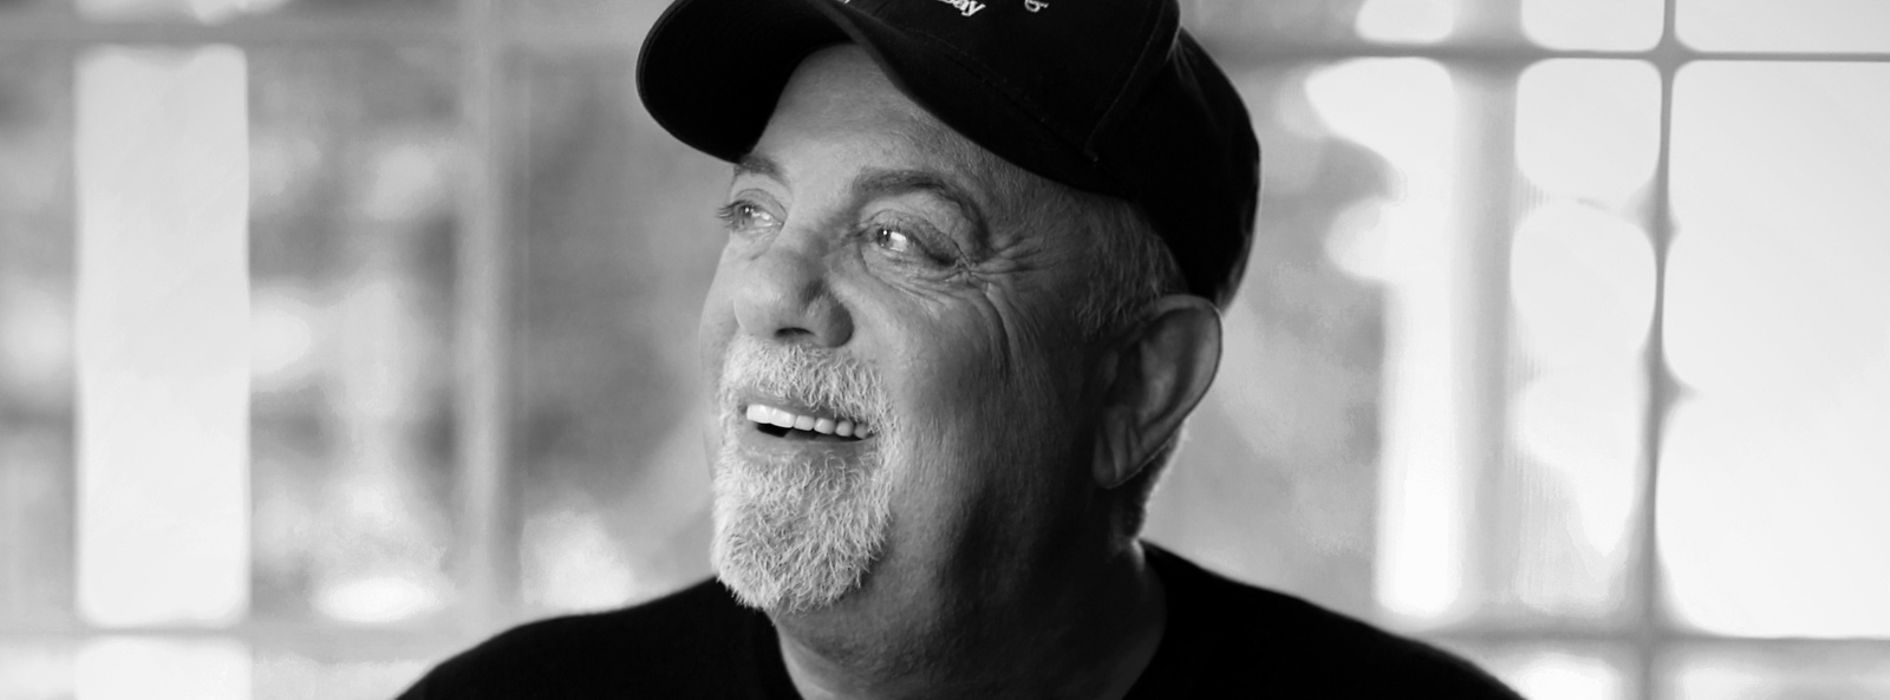 Billy Joel, Portraitfoto, schwarz-weiss